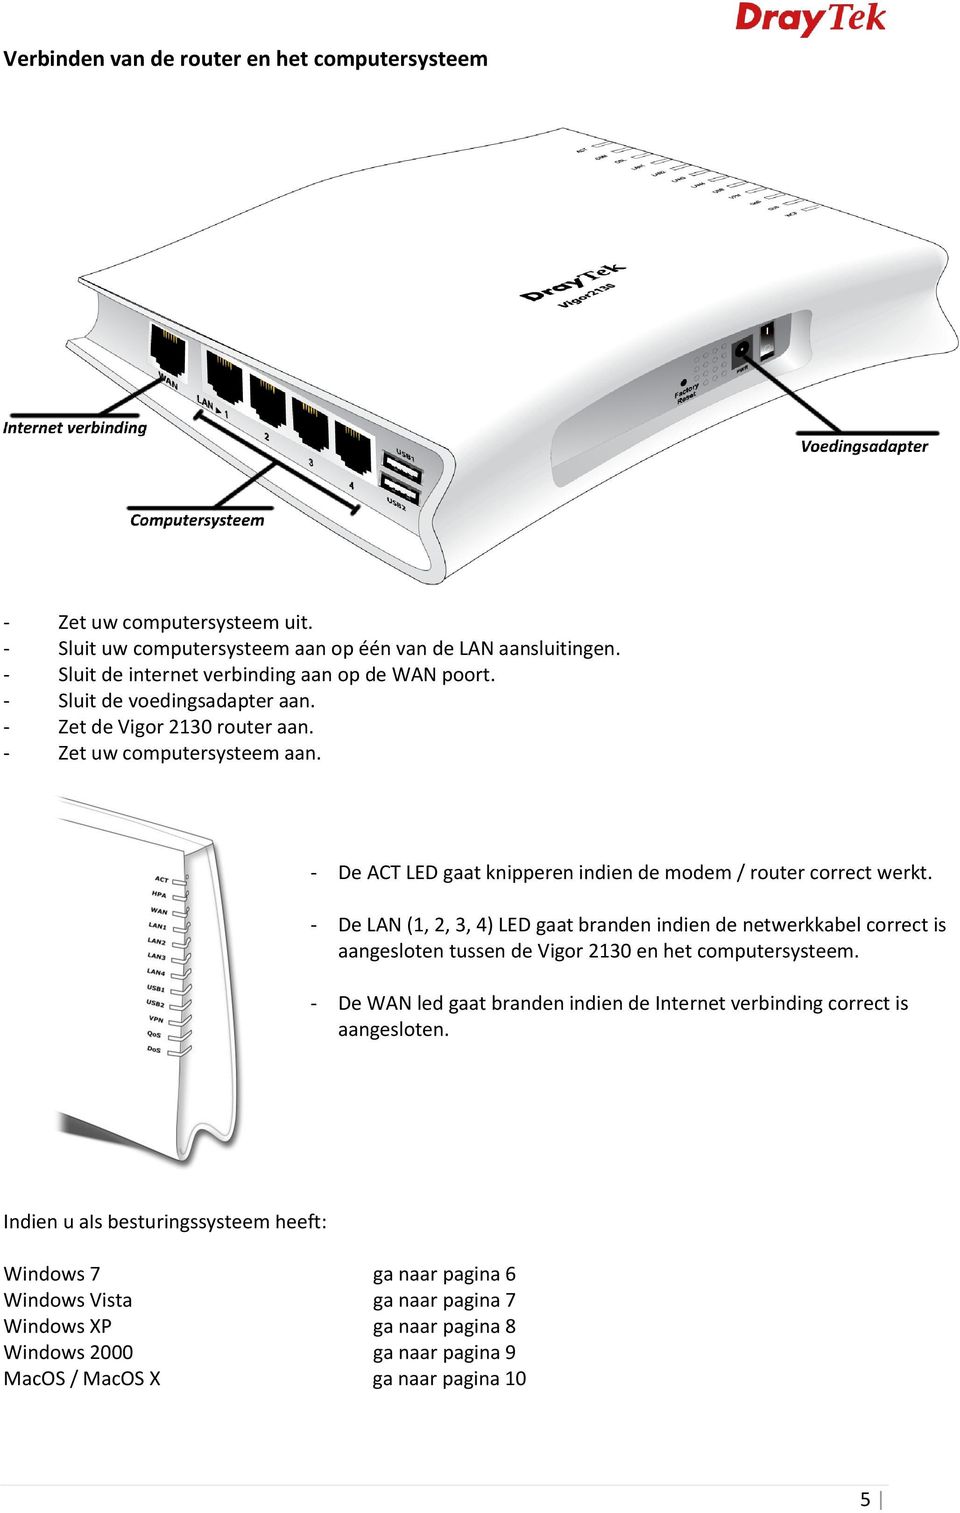 - De ACT LED gaat knipperen indien de modem / router correct werkt.